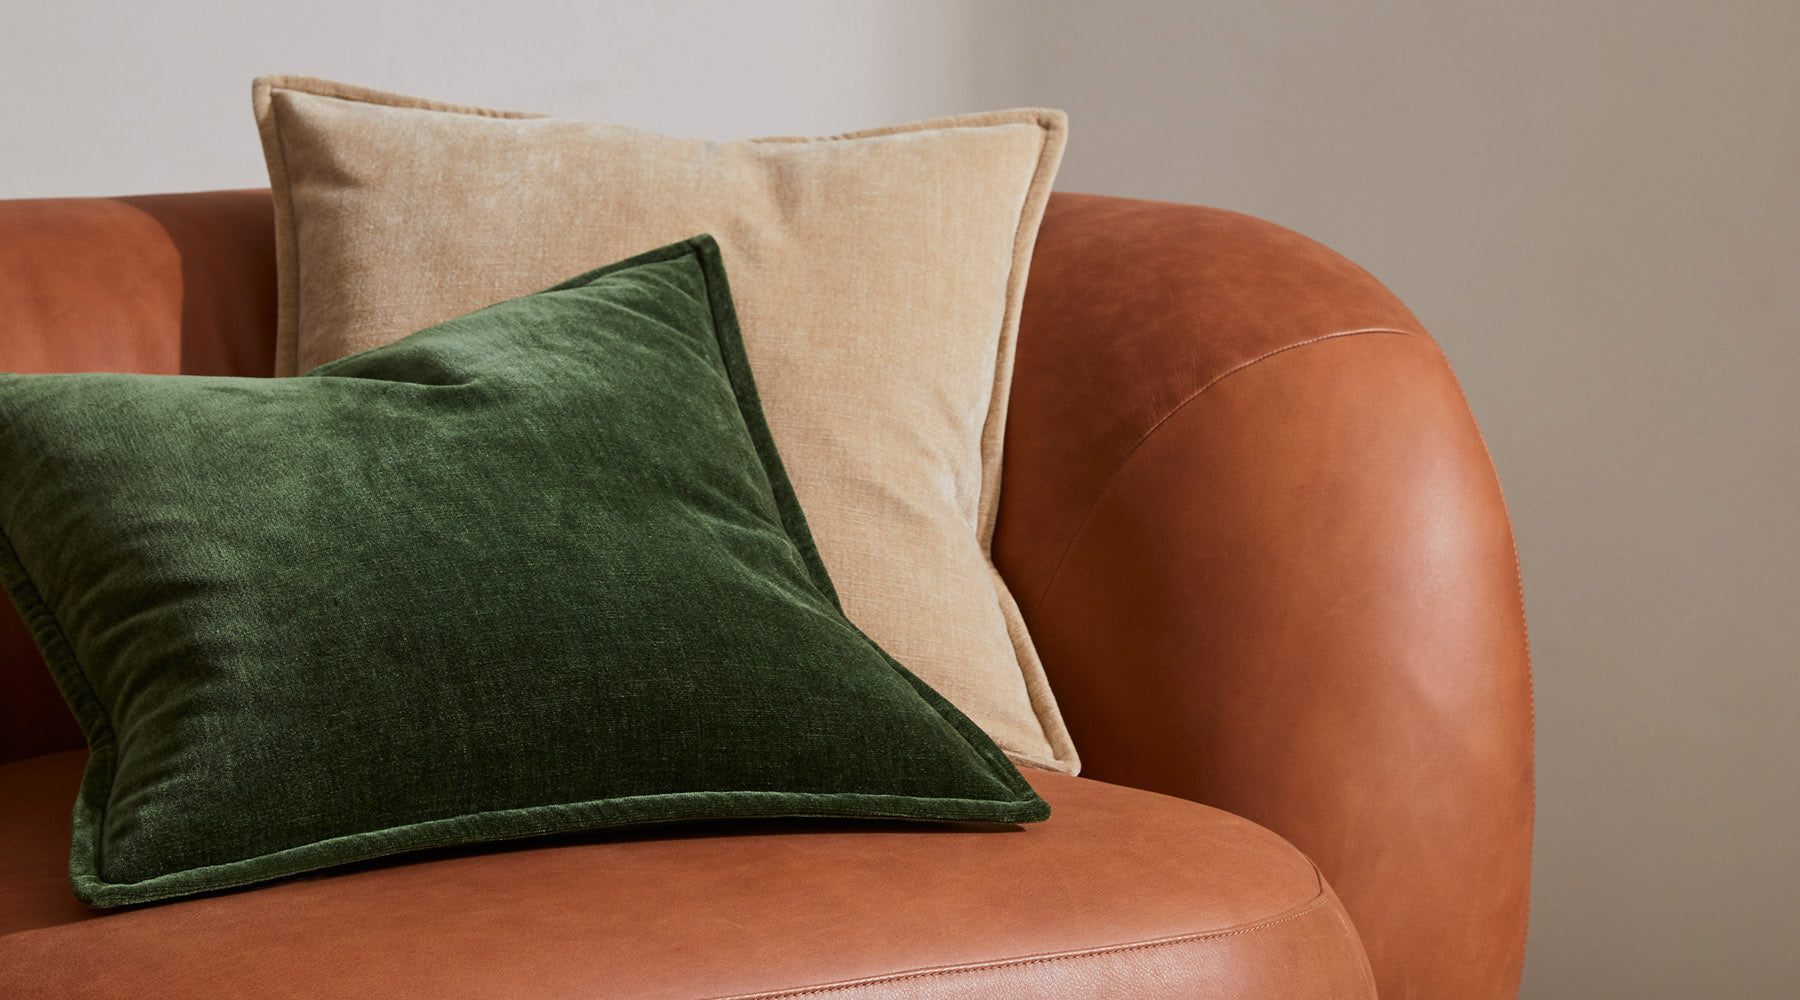 Weave Nova Forest and Tapioca cushions